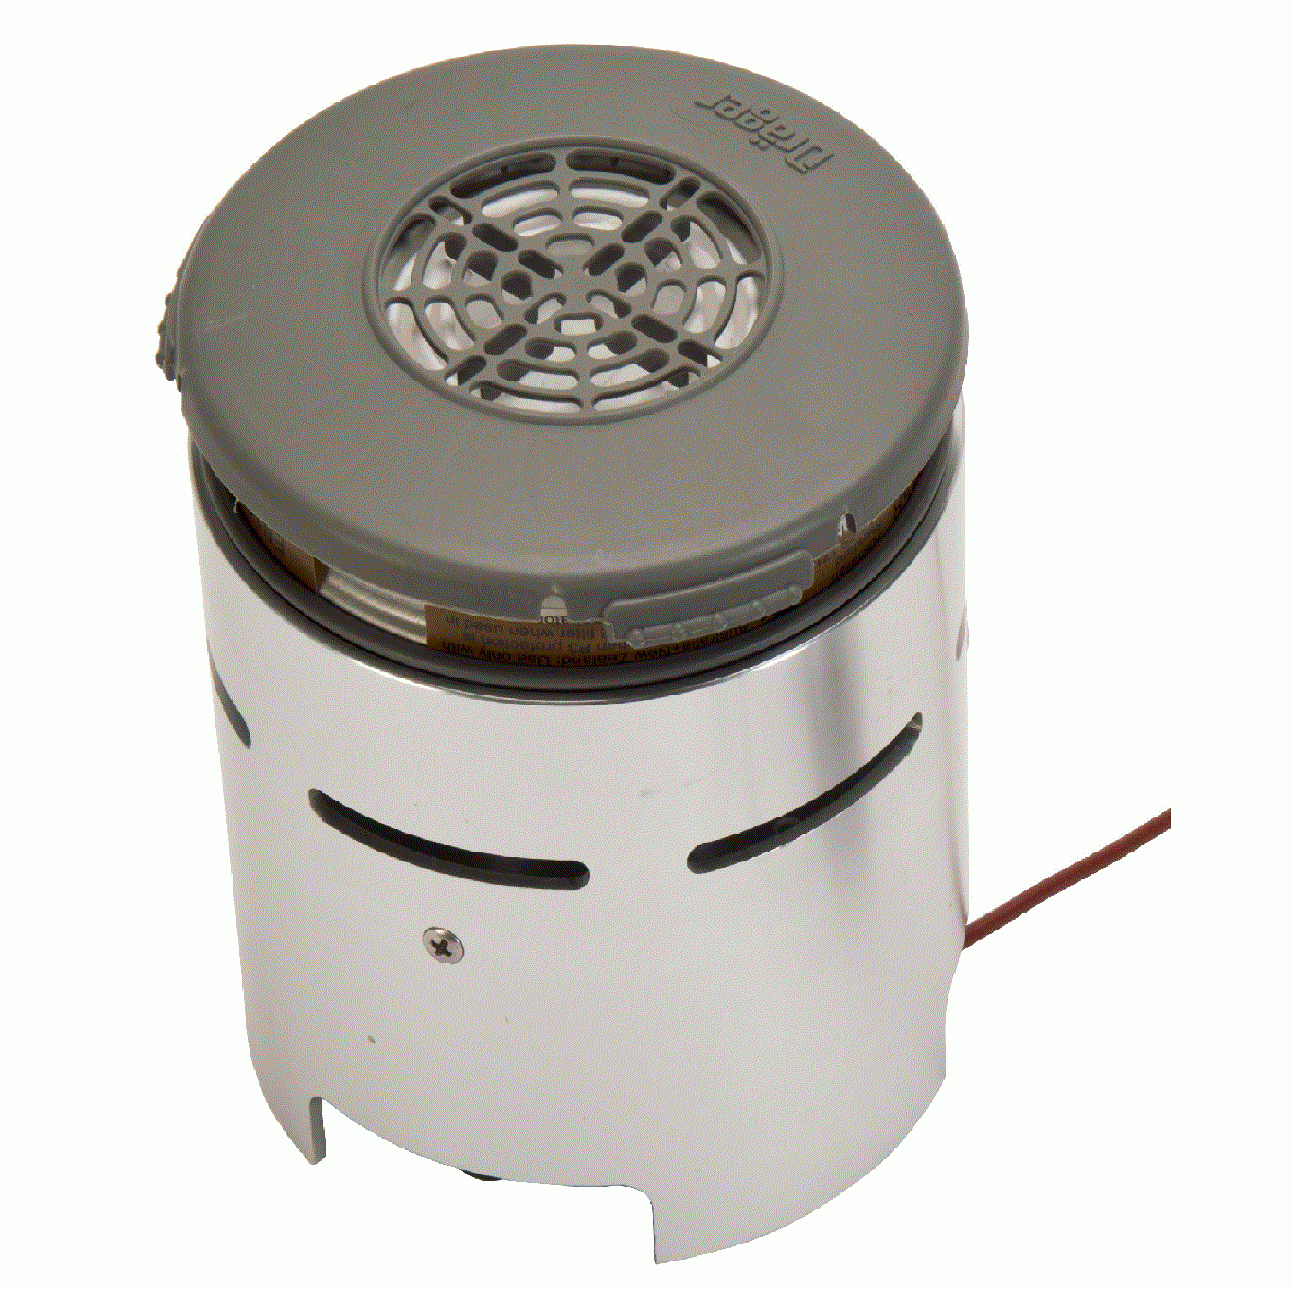 Incubator-Filter-Box, Composite Filter A2-P3D